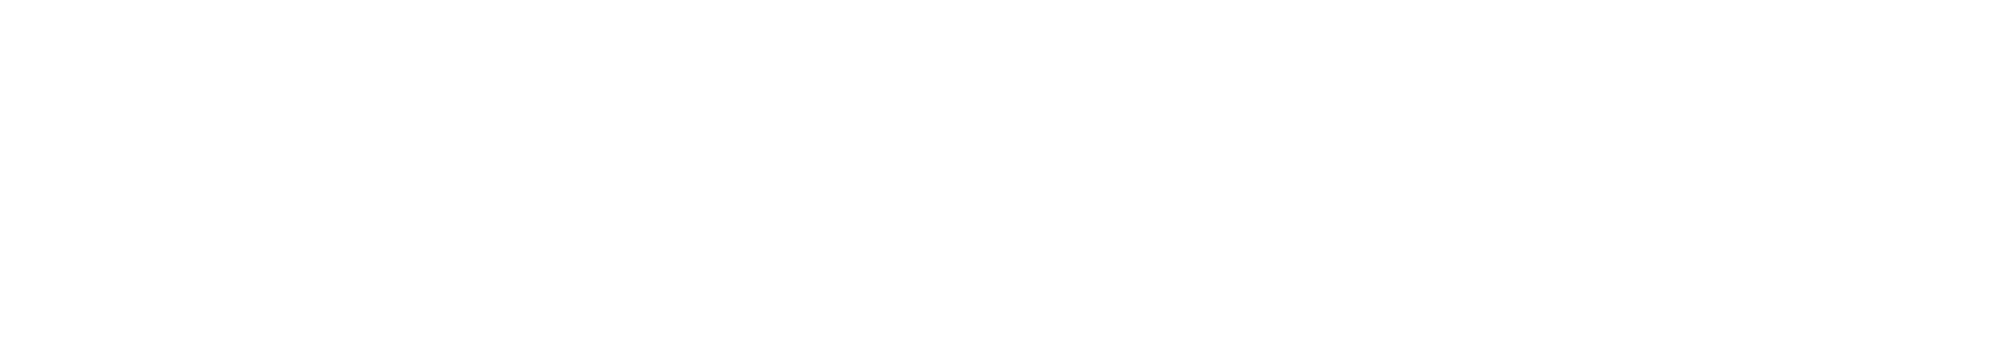 Digi:reBUILD logo